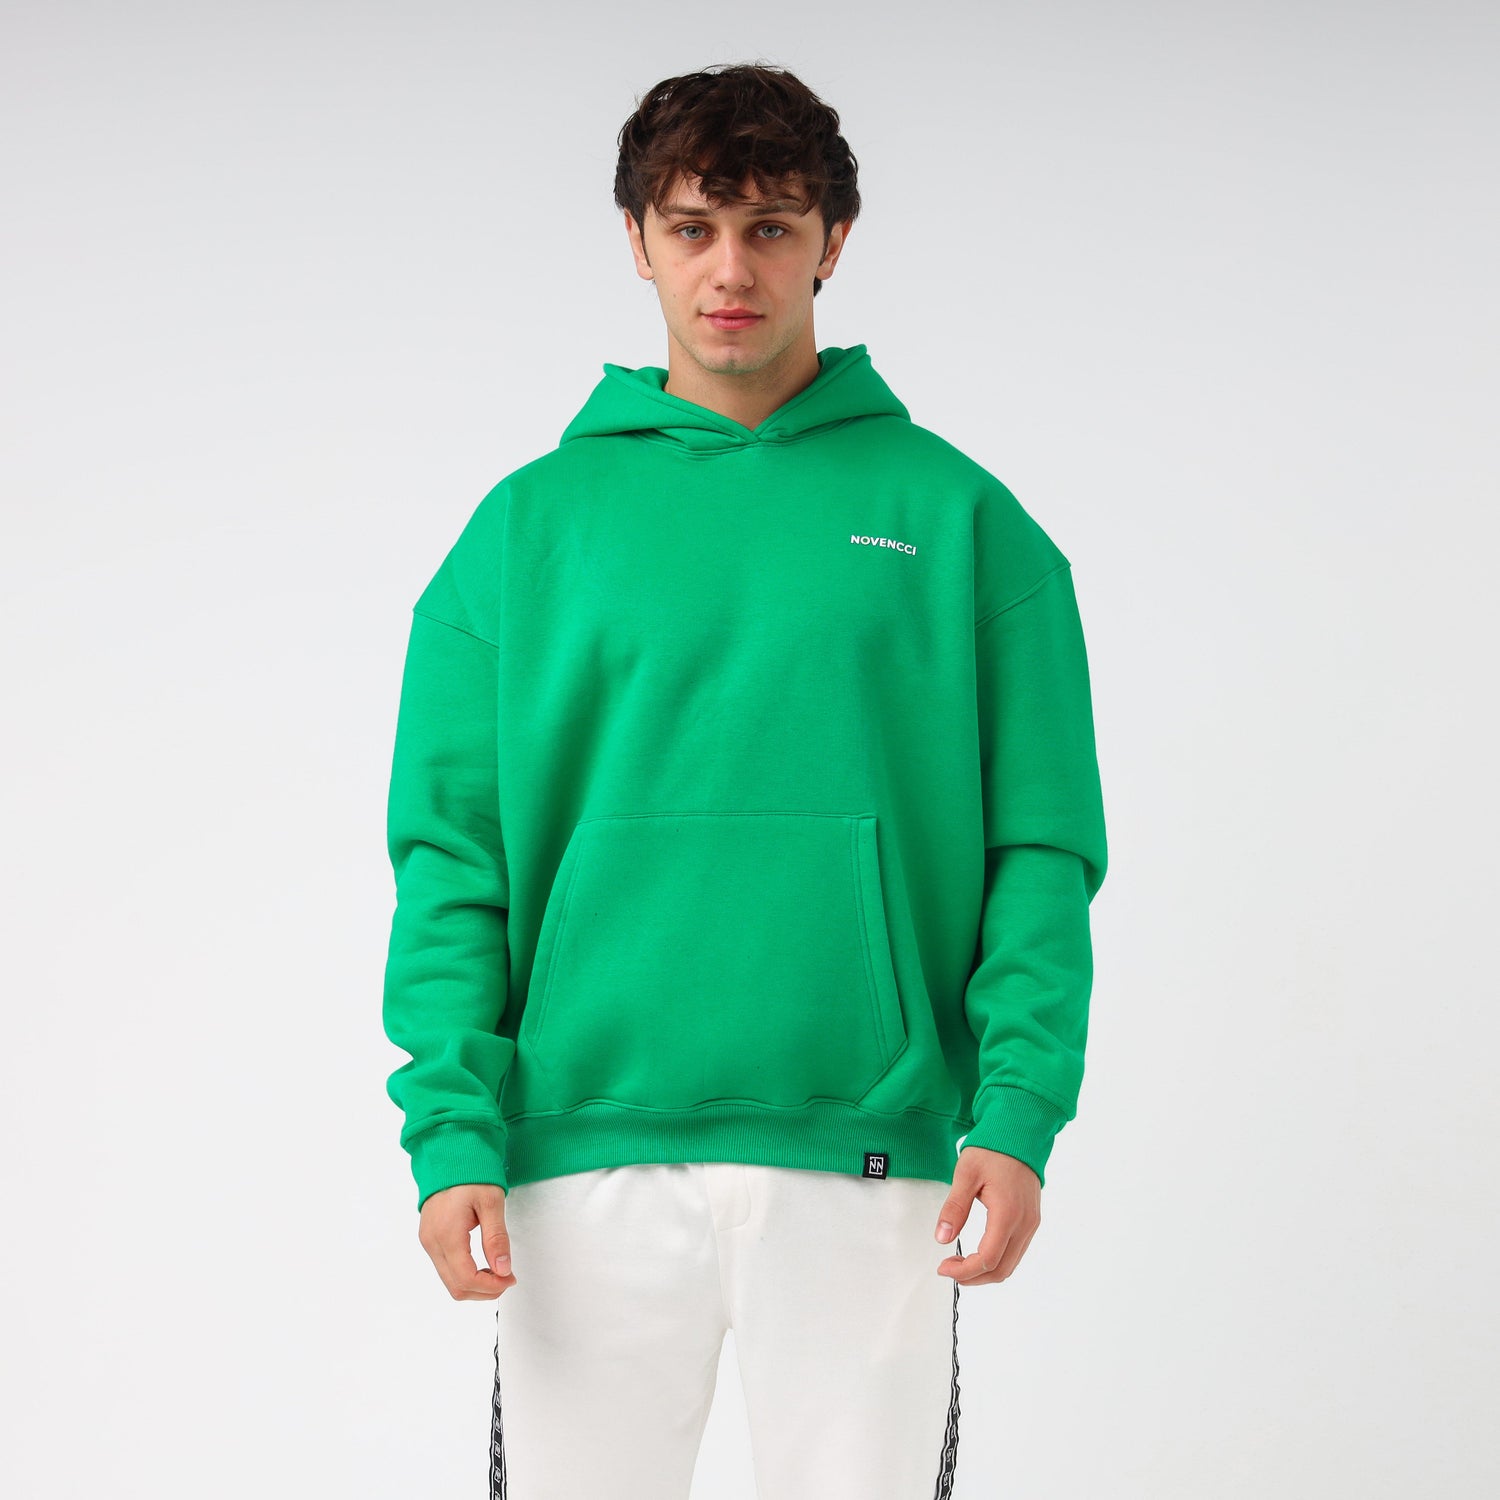 Basic green hoodie